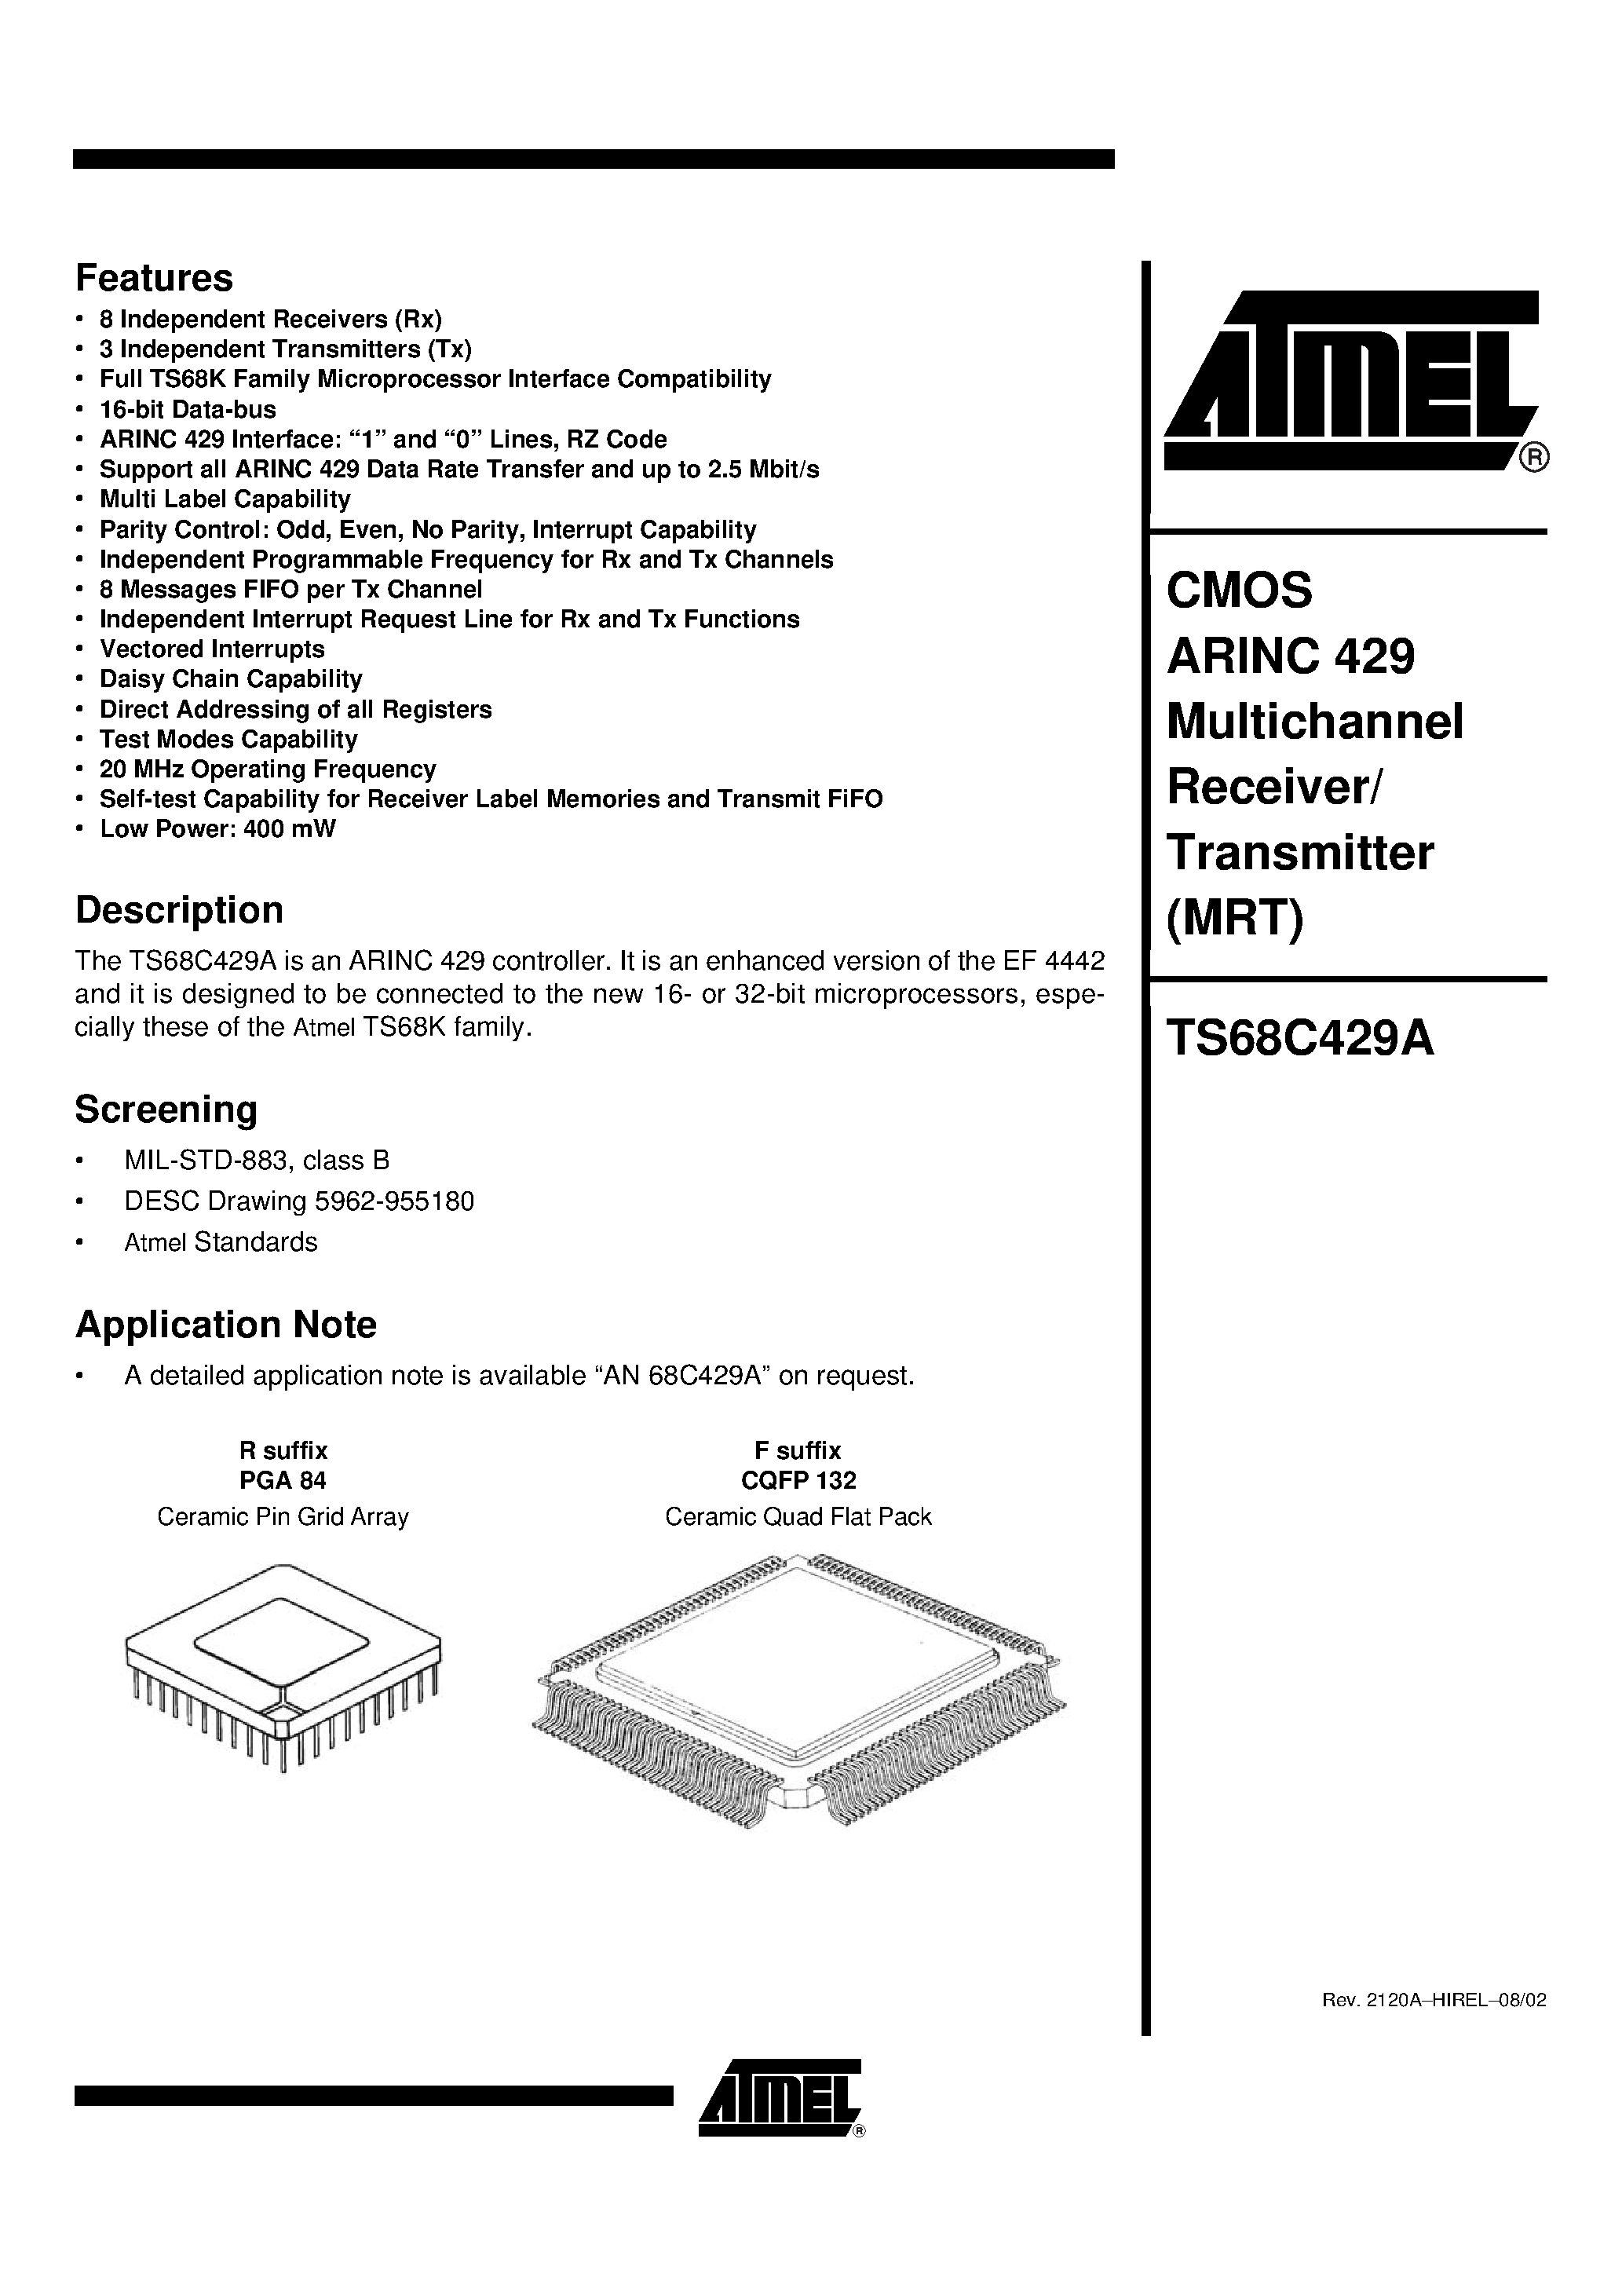 Даташит TS68C429AMR - CMOS ARINC 429 Multichannel Receiver/ Transmitter MRT страница 1